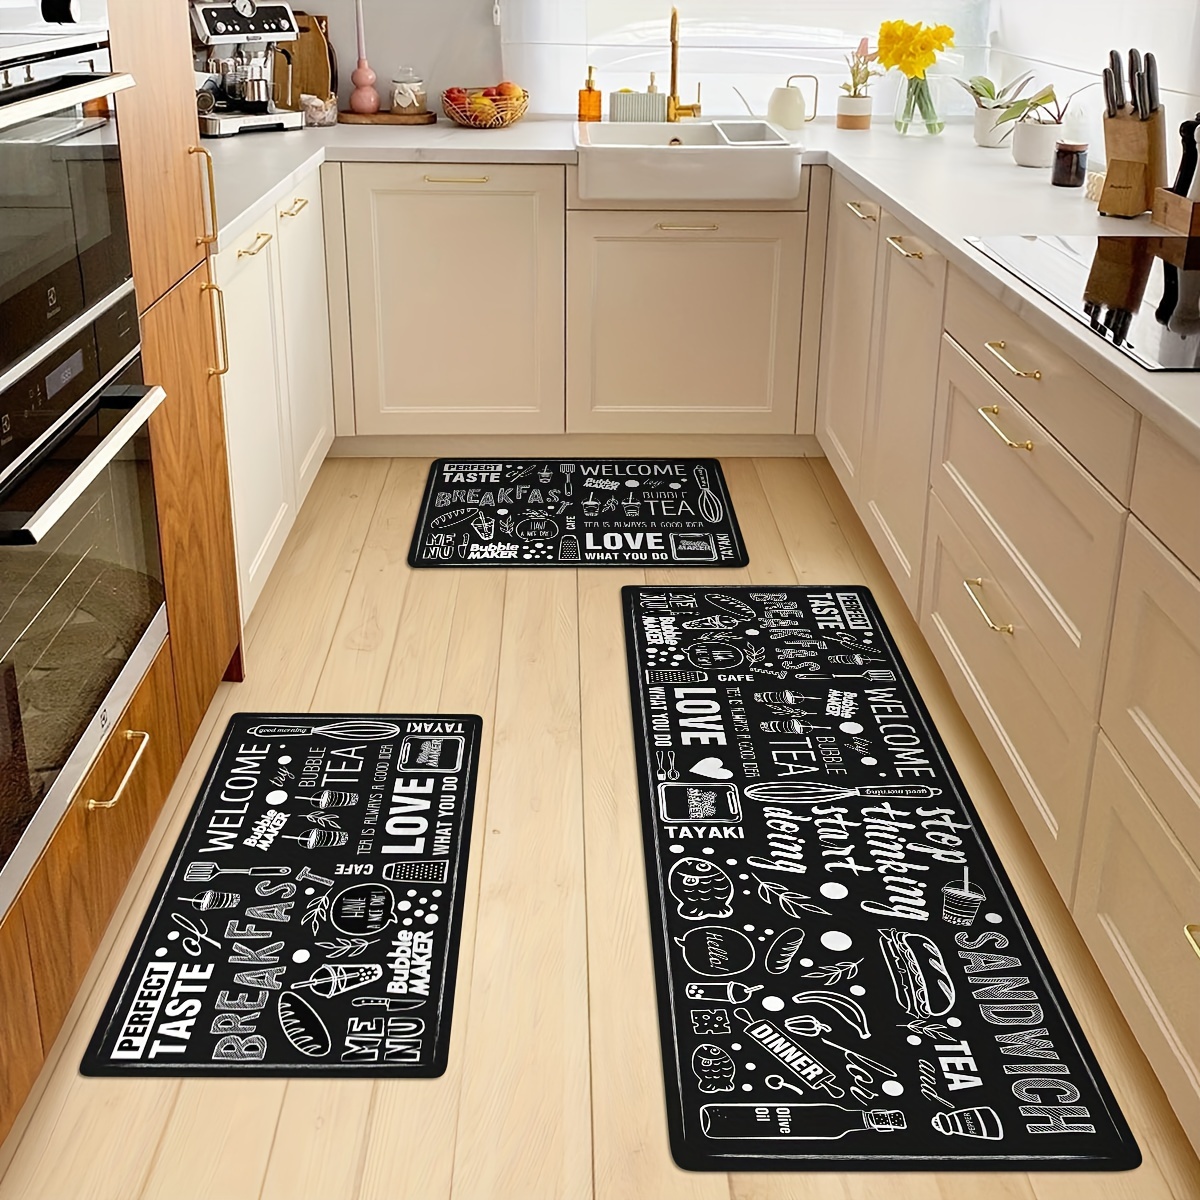  Kitchen Rugs Sets 3 PCS Non Slip Kitchen Mats For  Floor,Washable Kitchen Runner Rug,Super Absorbent Kitchen Mats For Kitchen ,Bathroom,Floor,Office,Sink